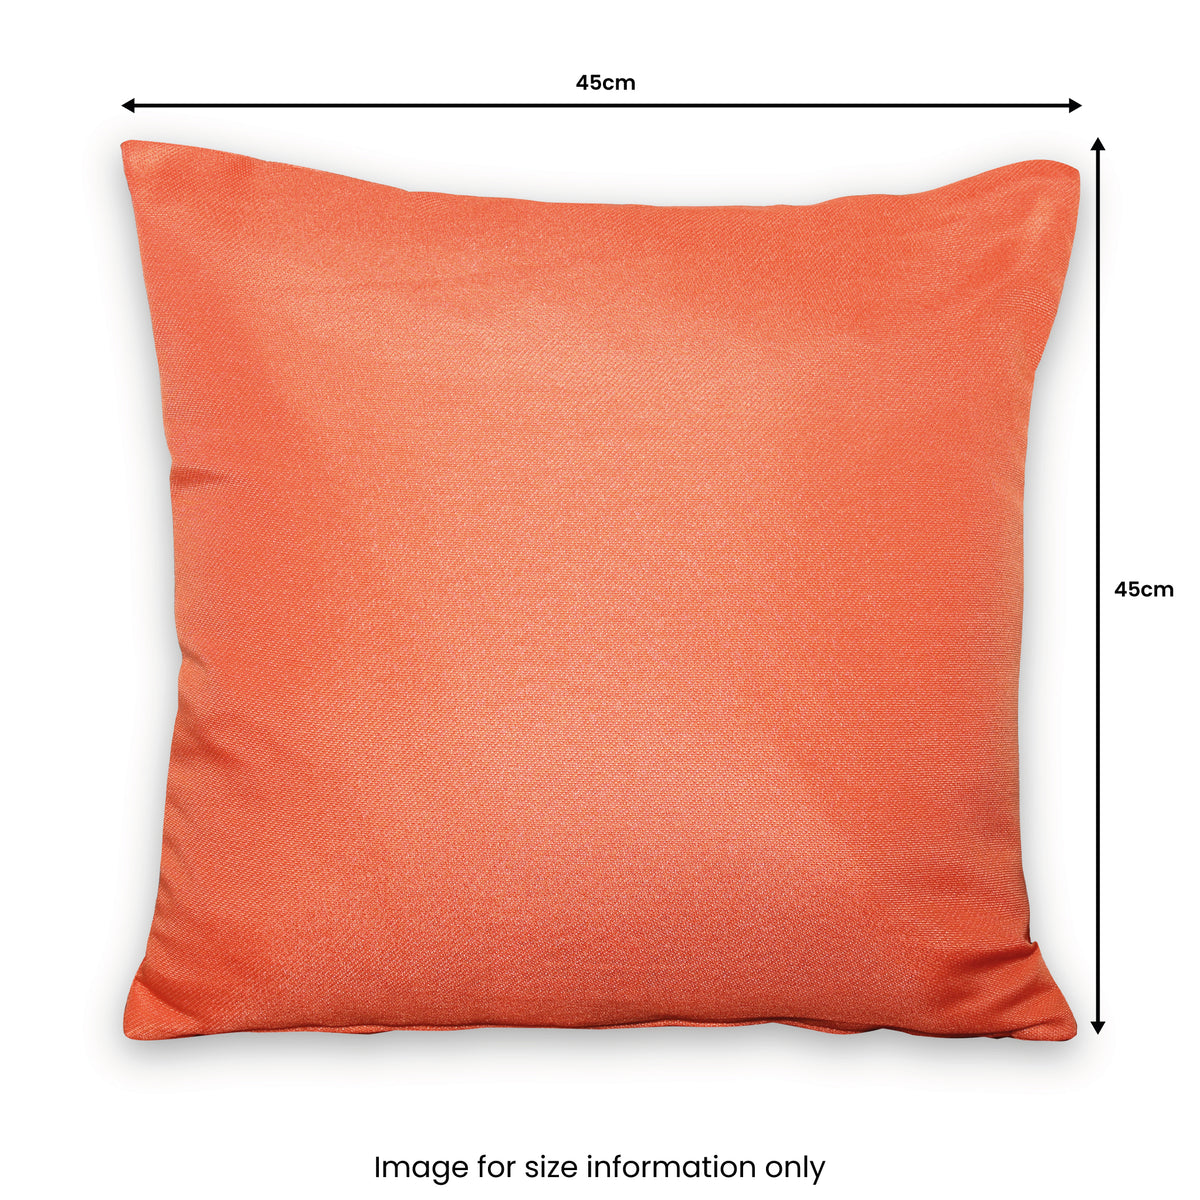 Outdoor Orange Plain Scatter Cushion dimensions